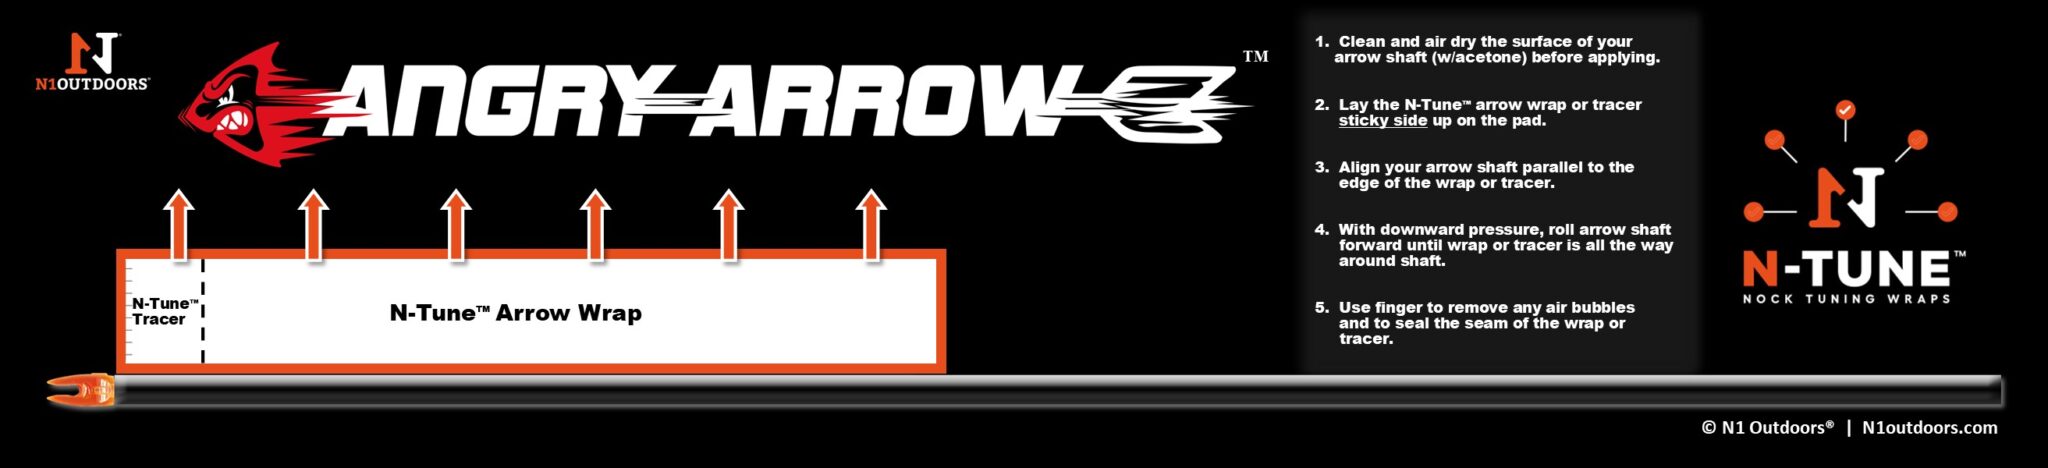 Angry Arrow Arrow Wrap Pad